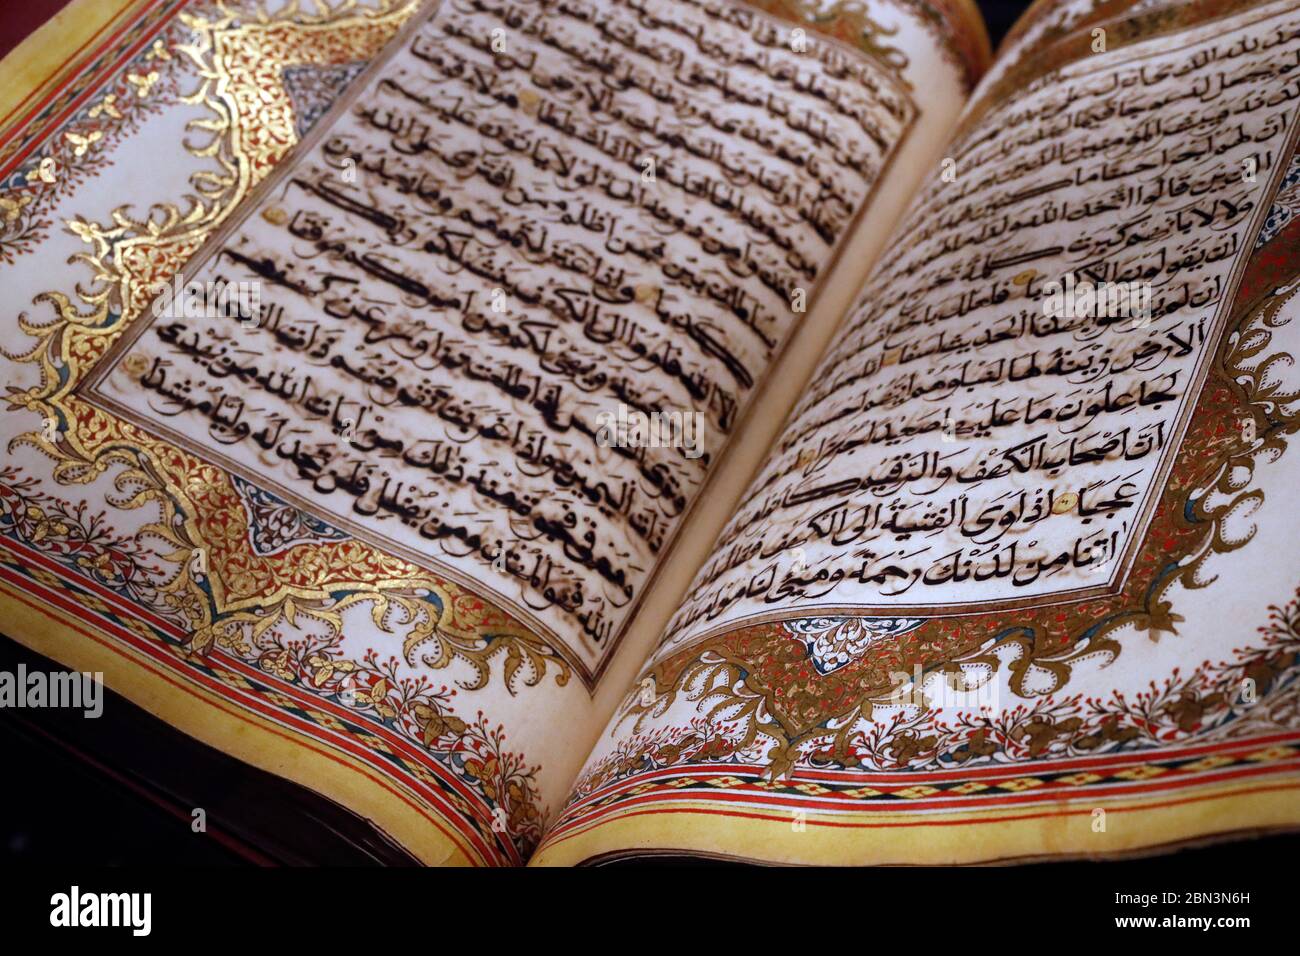 Museo delle Arti Islamiche. Royal Quran. Terengganu, Penisola Maly. 1871 AD. Kuala Lumpur. Malesia. Foto Stock